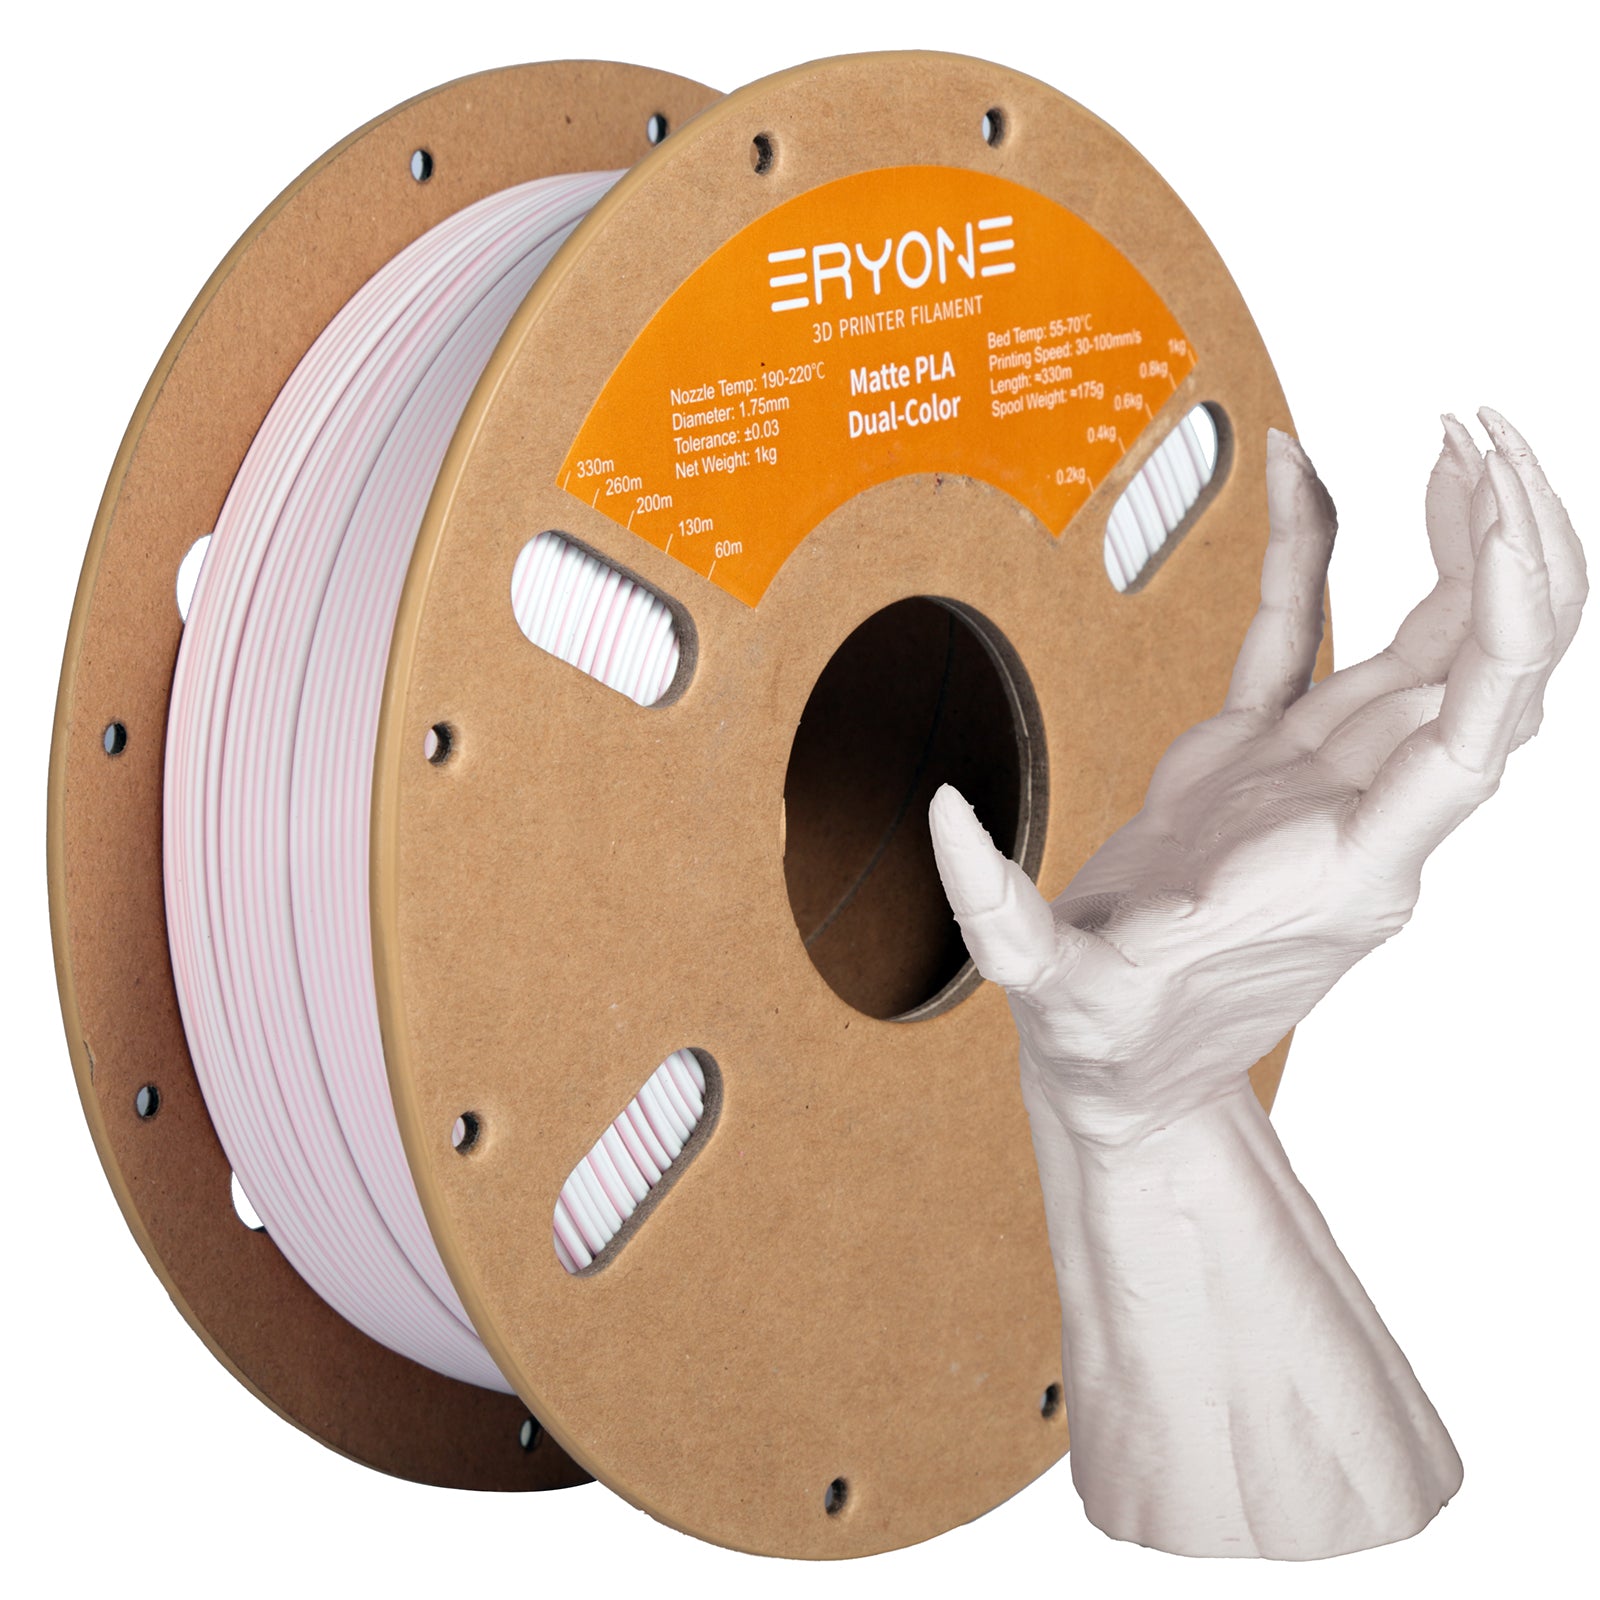 ERYONE PLA Filament 1.75mm, 3D Printer Filament PLA +/- 0.03mm,  1kg(2.2lbs)/Spool, Skin